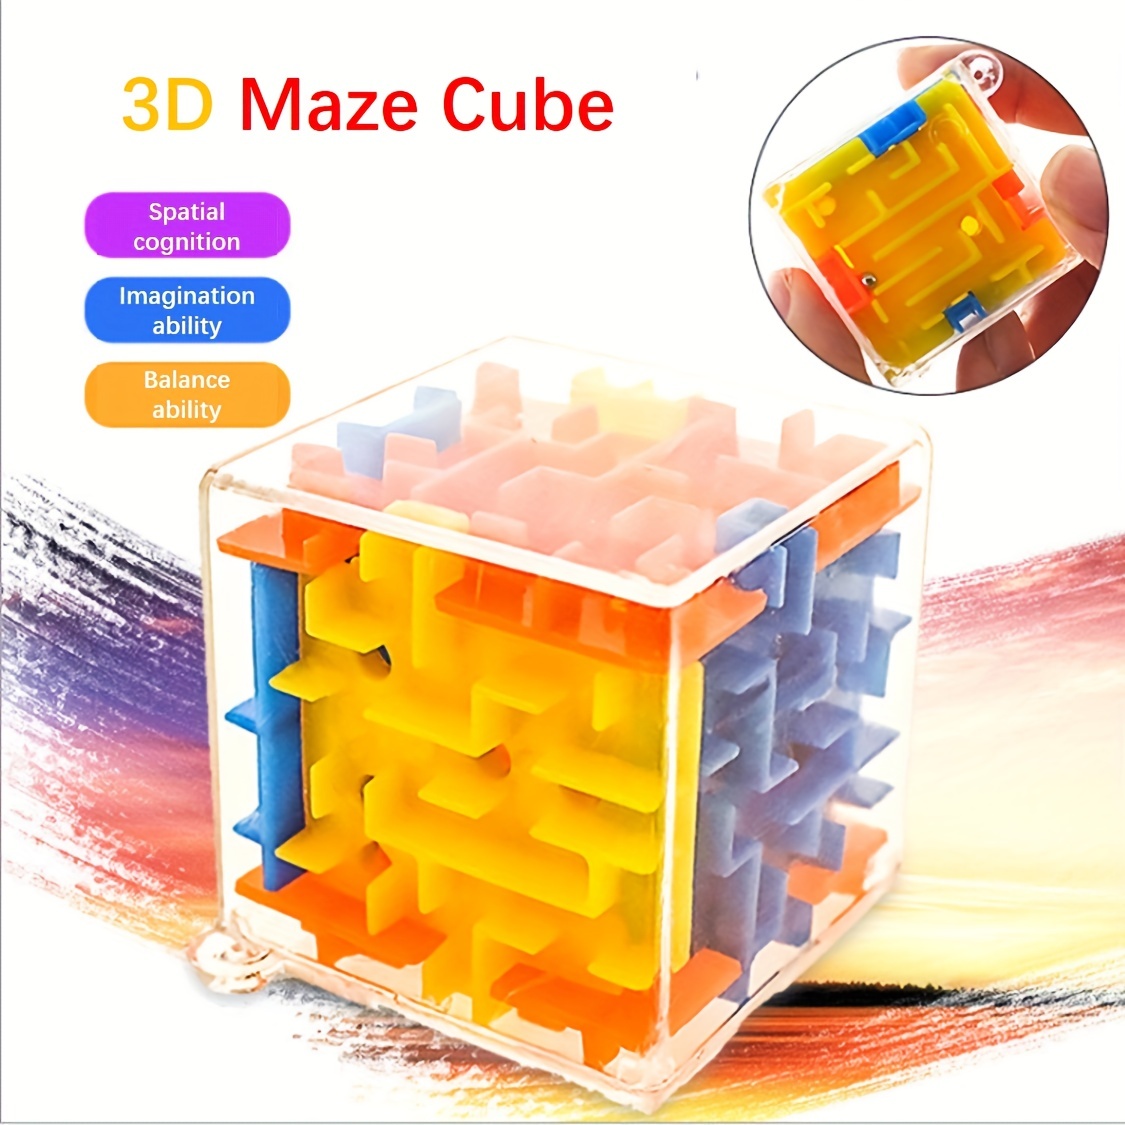 Tiny Toys 3D Transparent Maze Magic Cube Puzzle Toys In Improve The Brain  Active Skills For Kids - Multicolor - Pretend Play - LUCKYPOT, Royapuram,  Chennai, Tamil Nadu